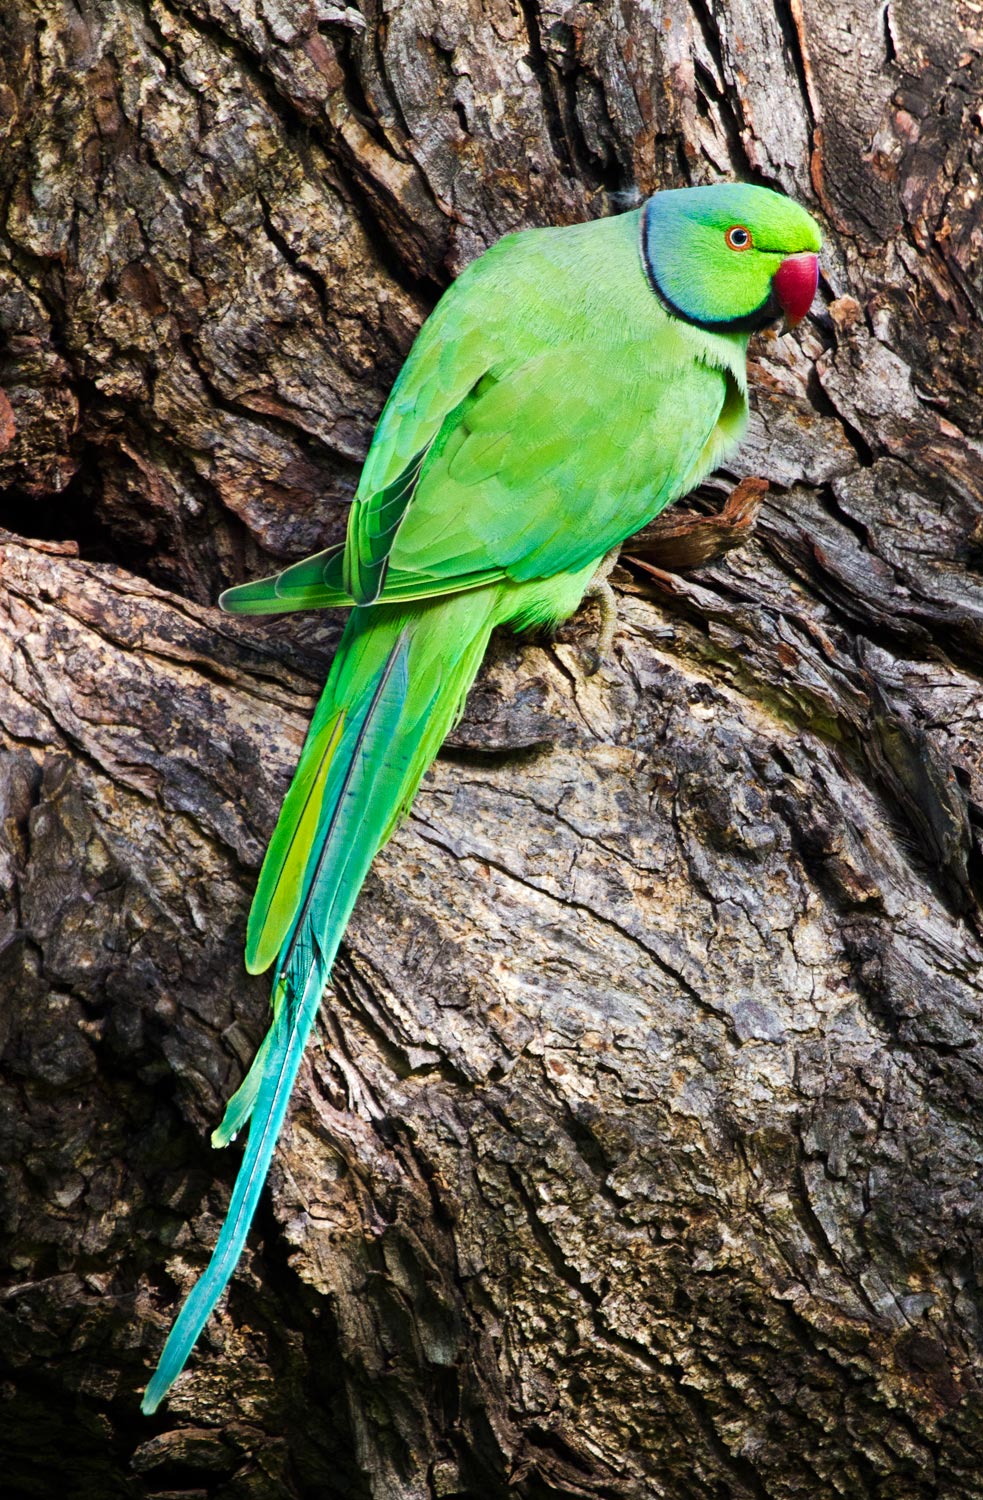 Pretty Rose-ringed parakeet